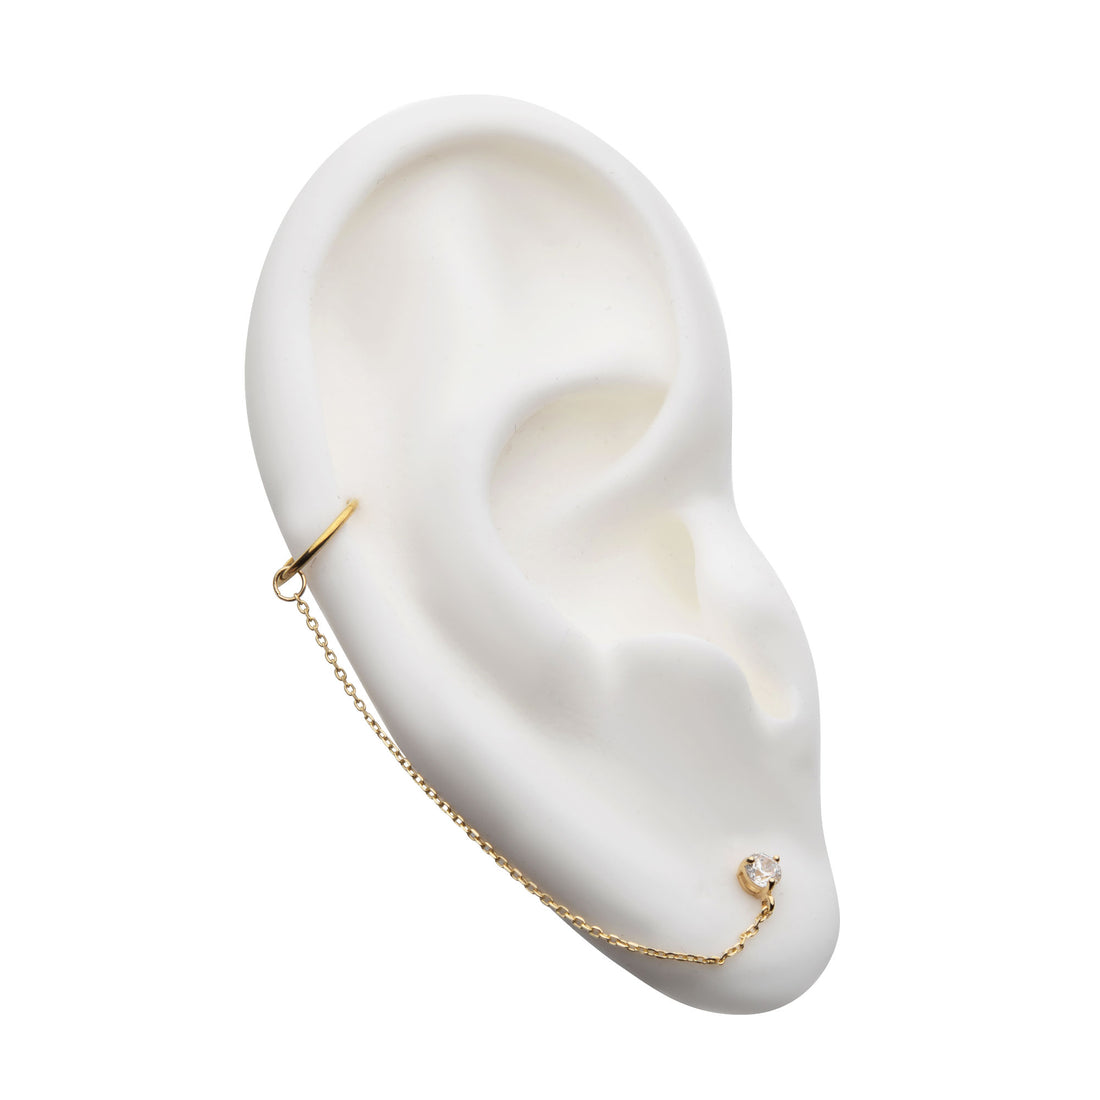 14kt Gold Prong Clear CZ Butterfly Back Stud Earrings –